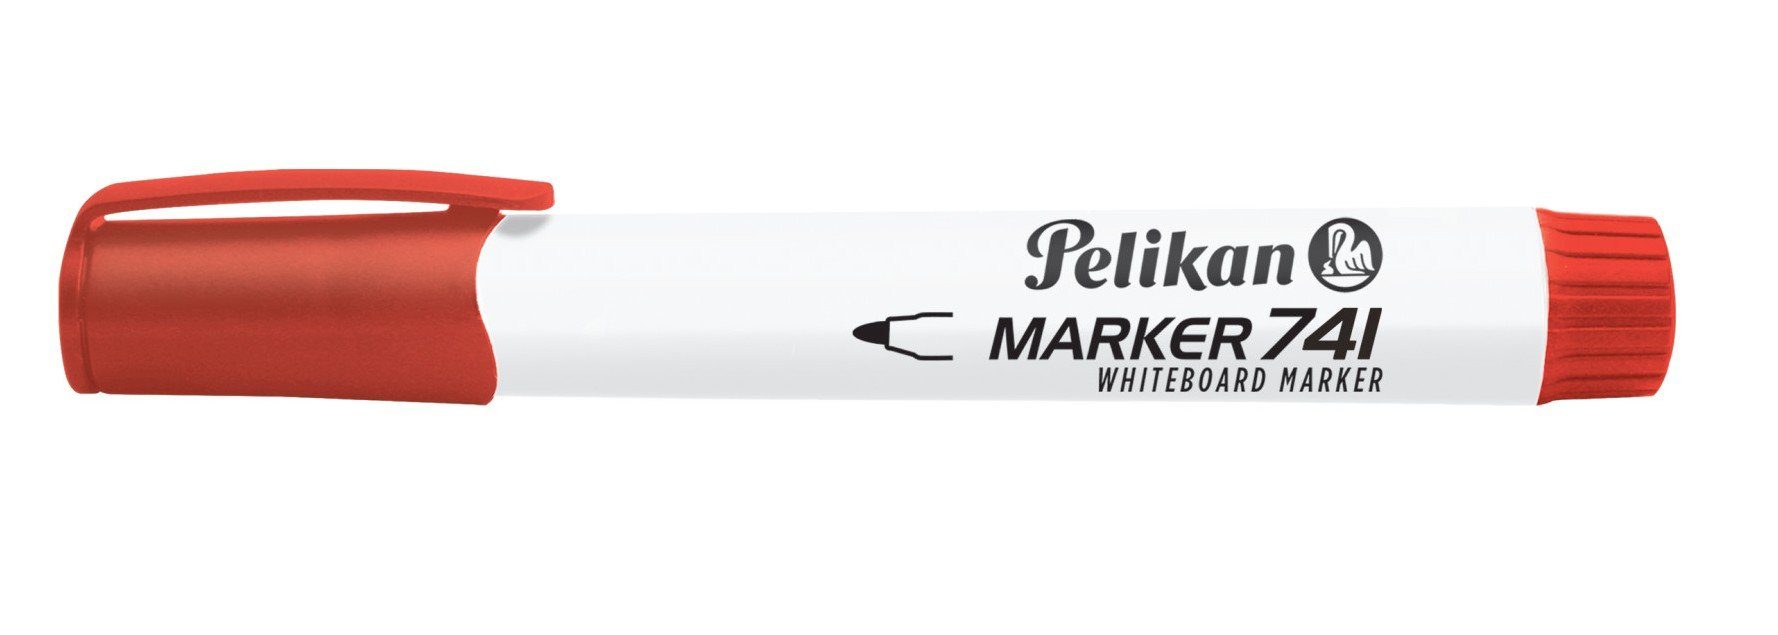 Whiteboard rot Marker Pelikan Marker 741 Pelikan